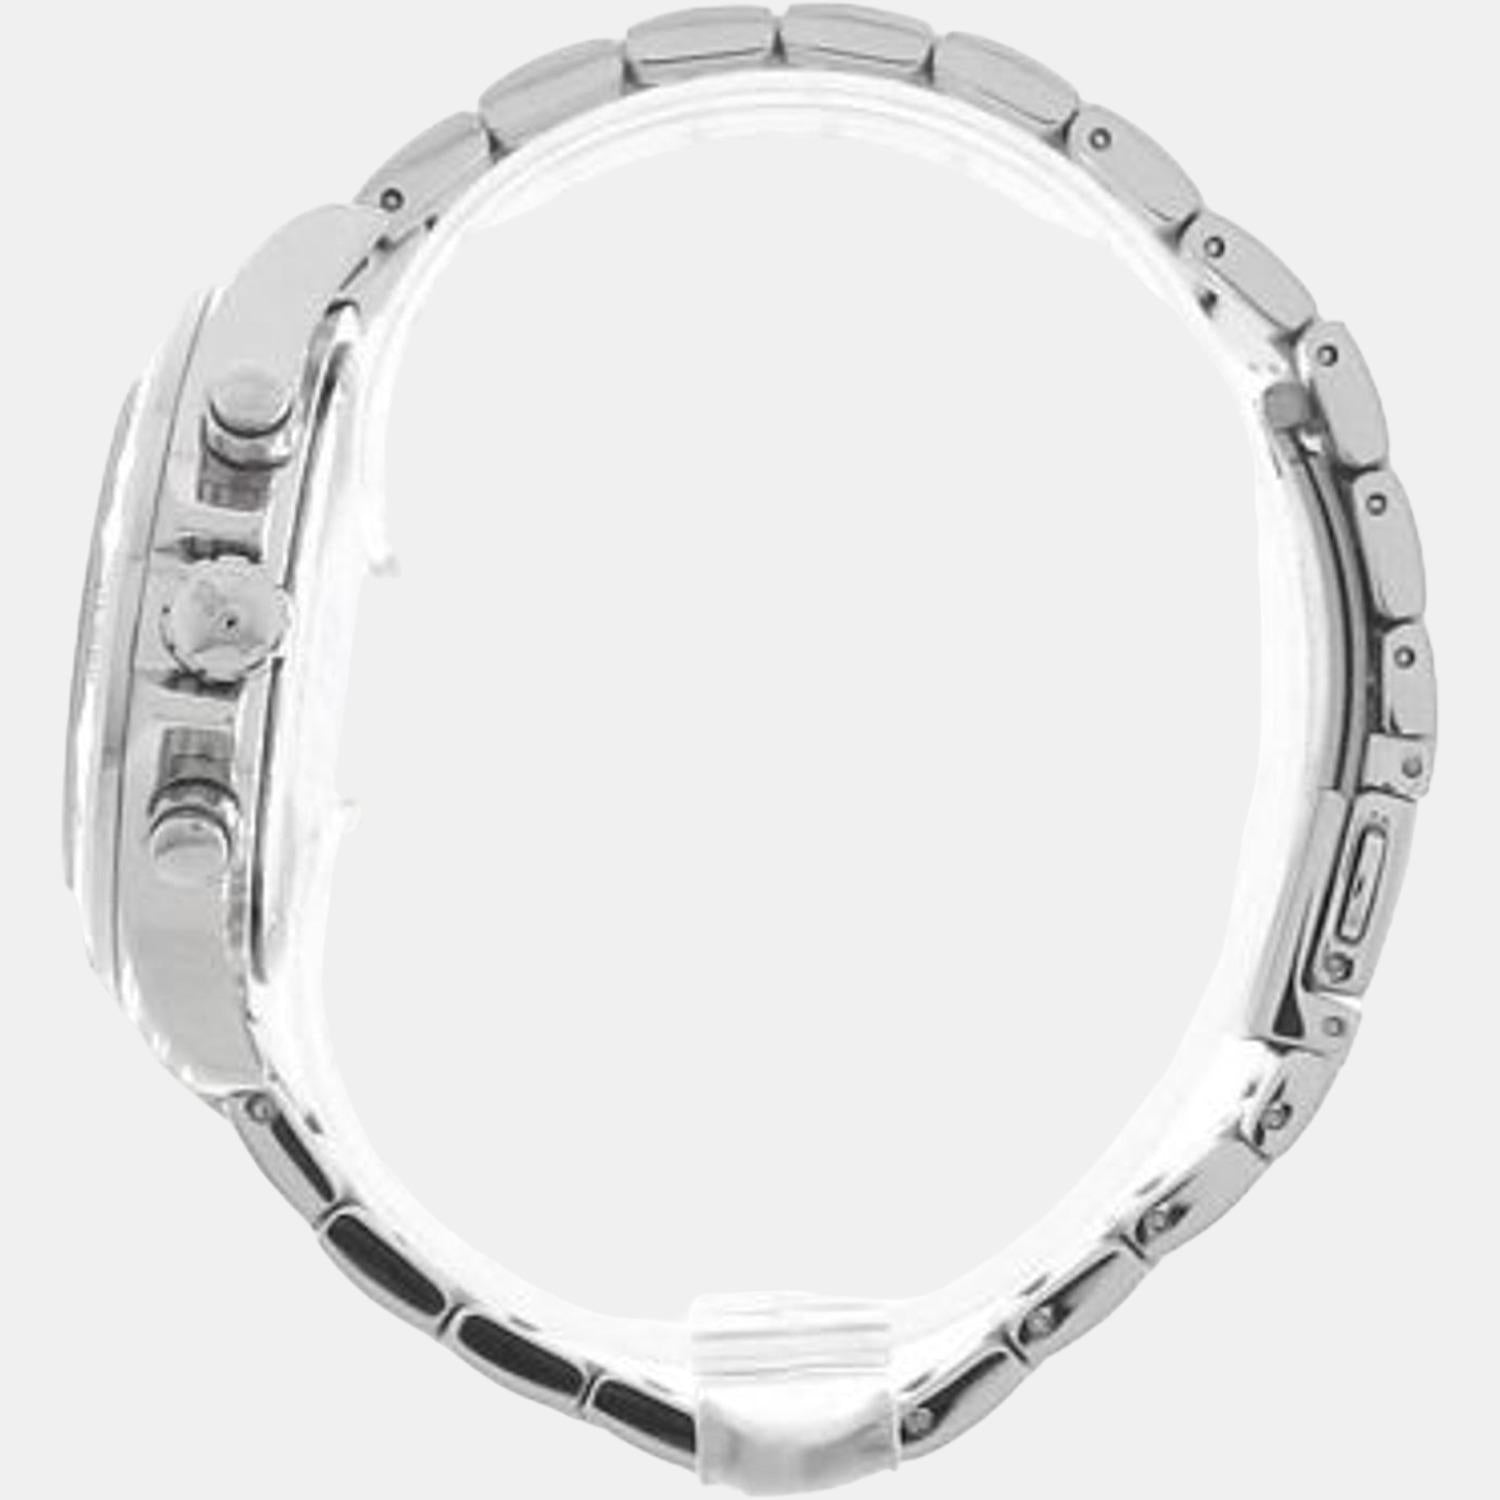 Hugo Boss Novia Chronograph Silver Dial Silver Steel Strap Watch for Women - 1502616